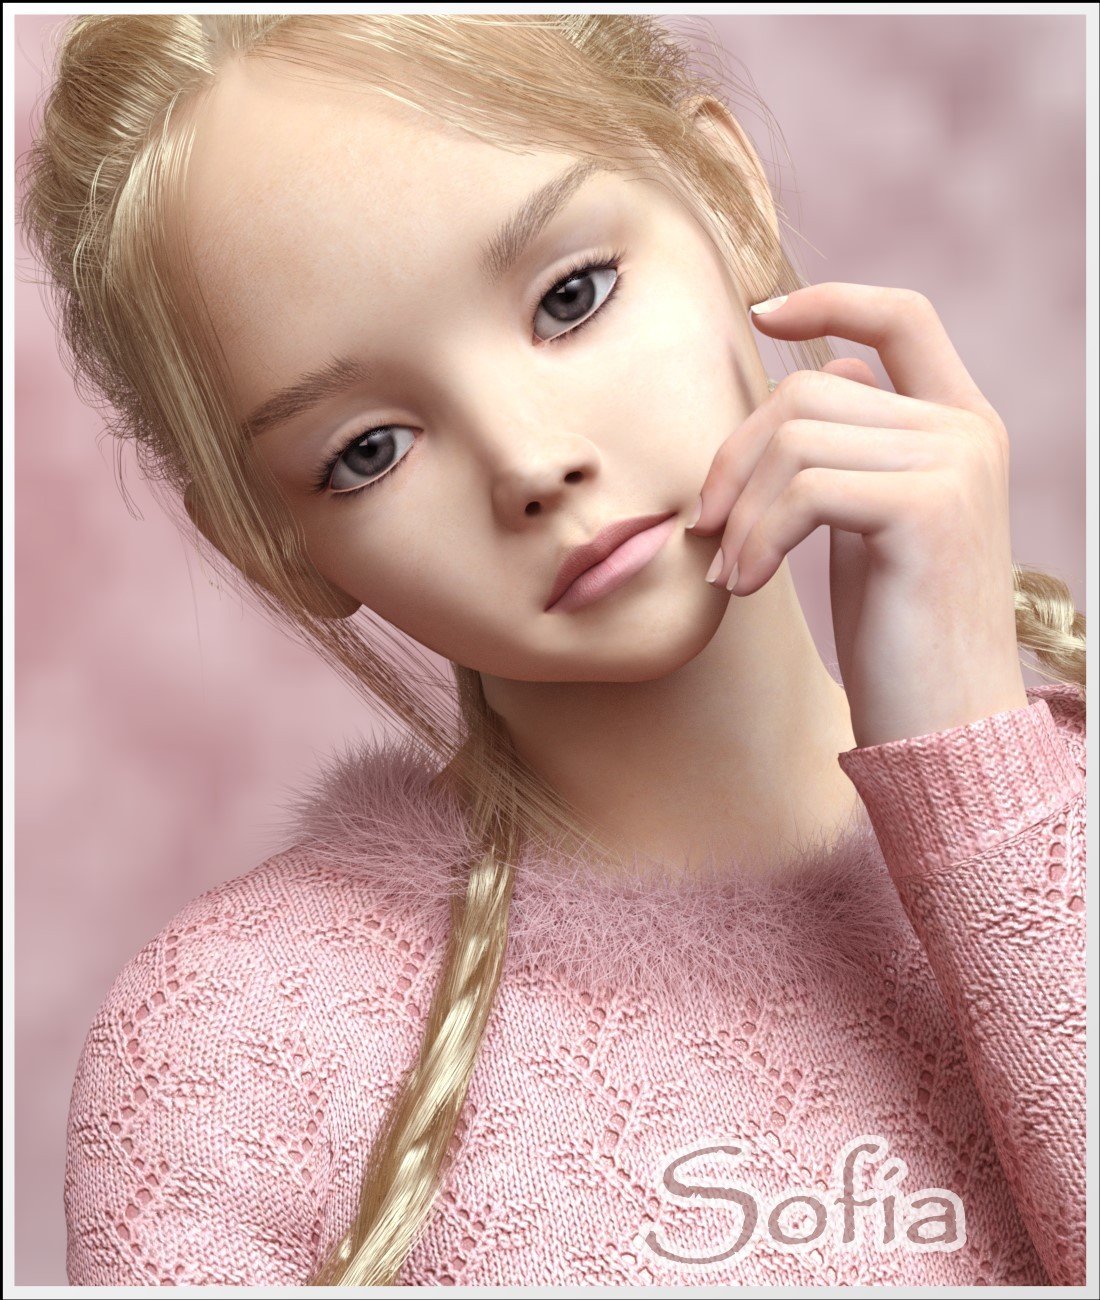 Sofia&Sweater G8F by: LUNA3D, 3D Models by Daz 3D